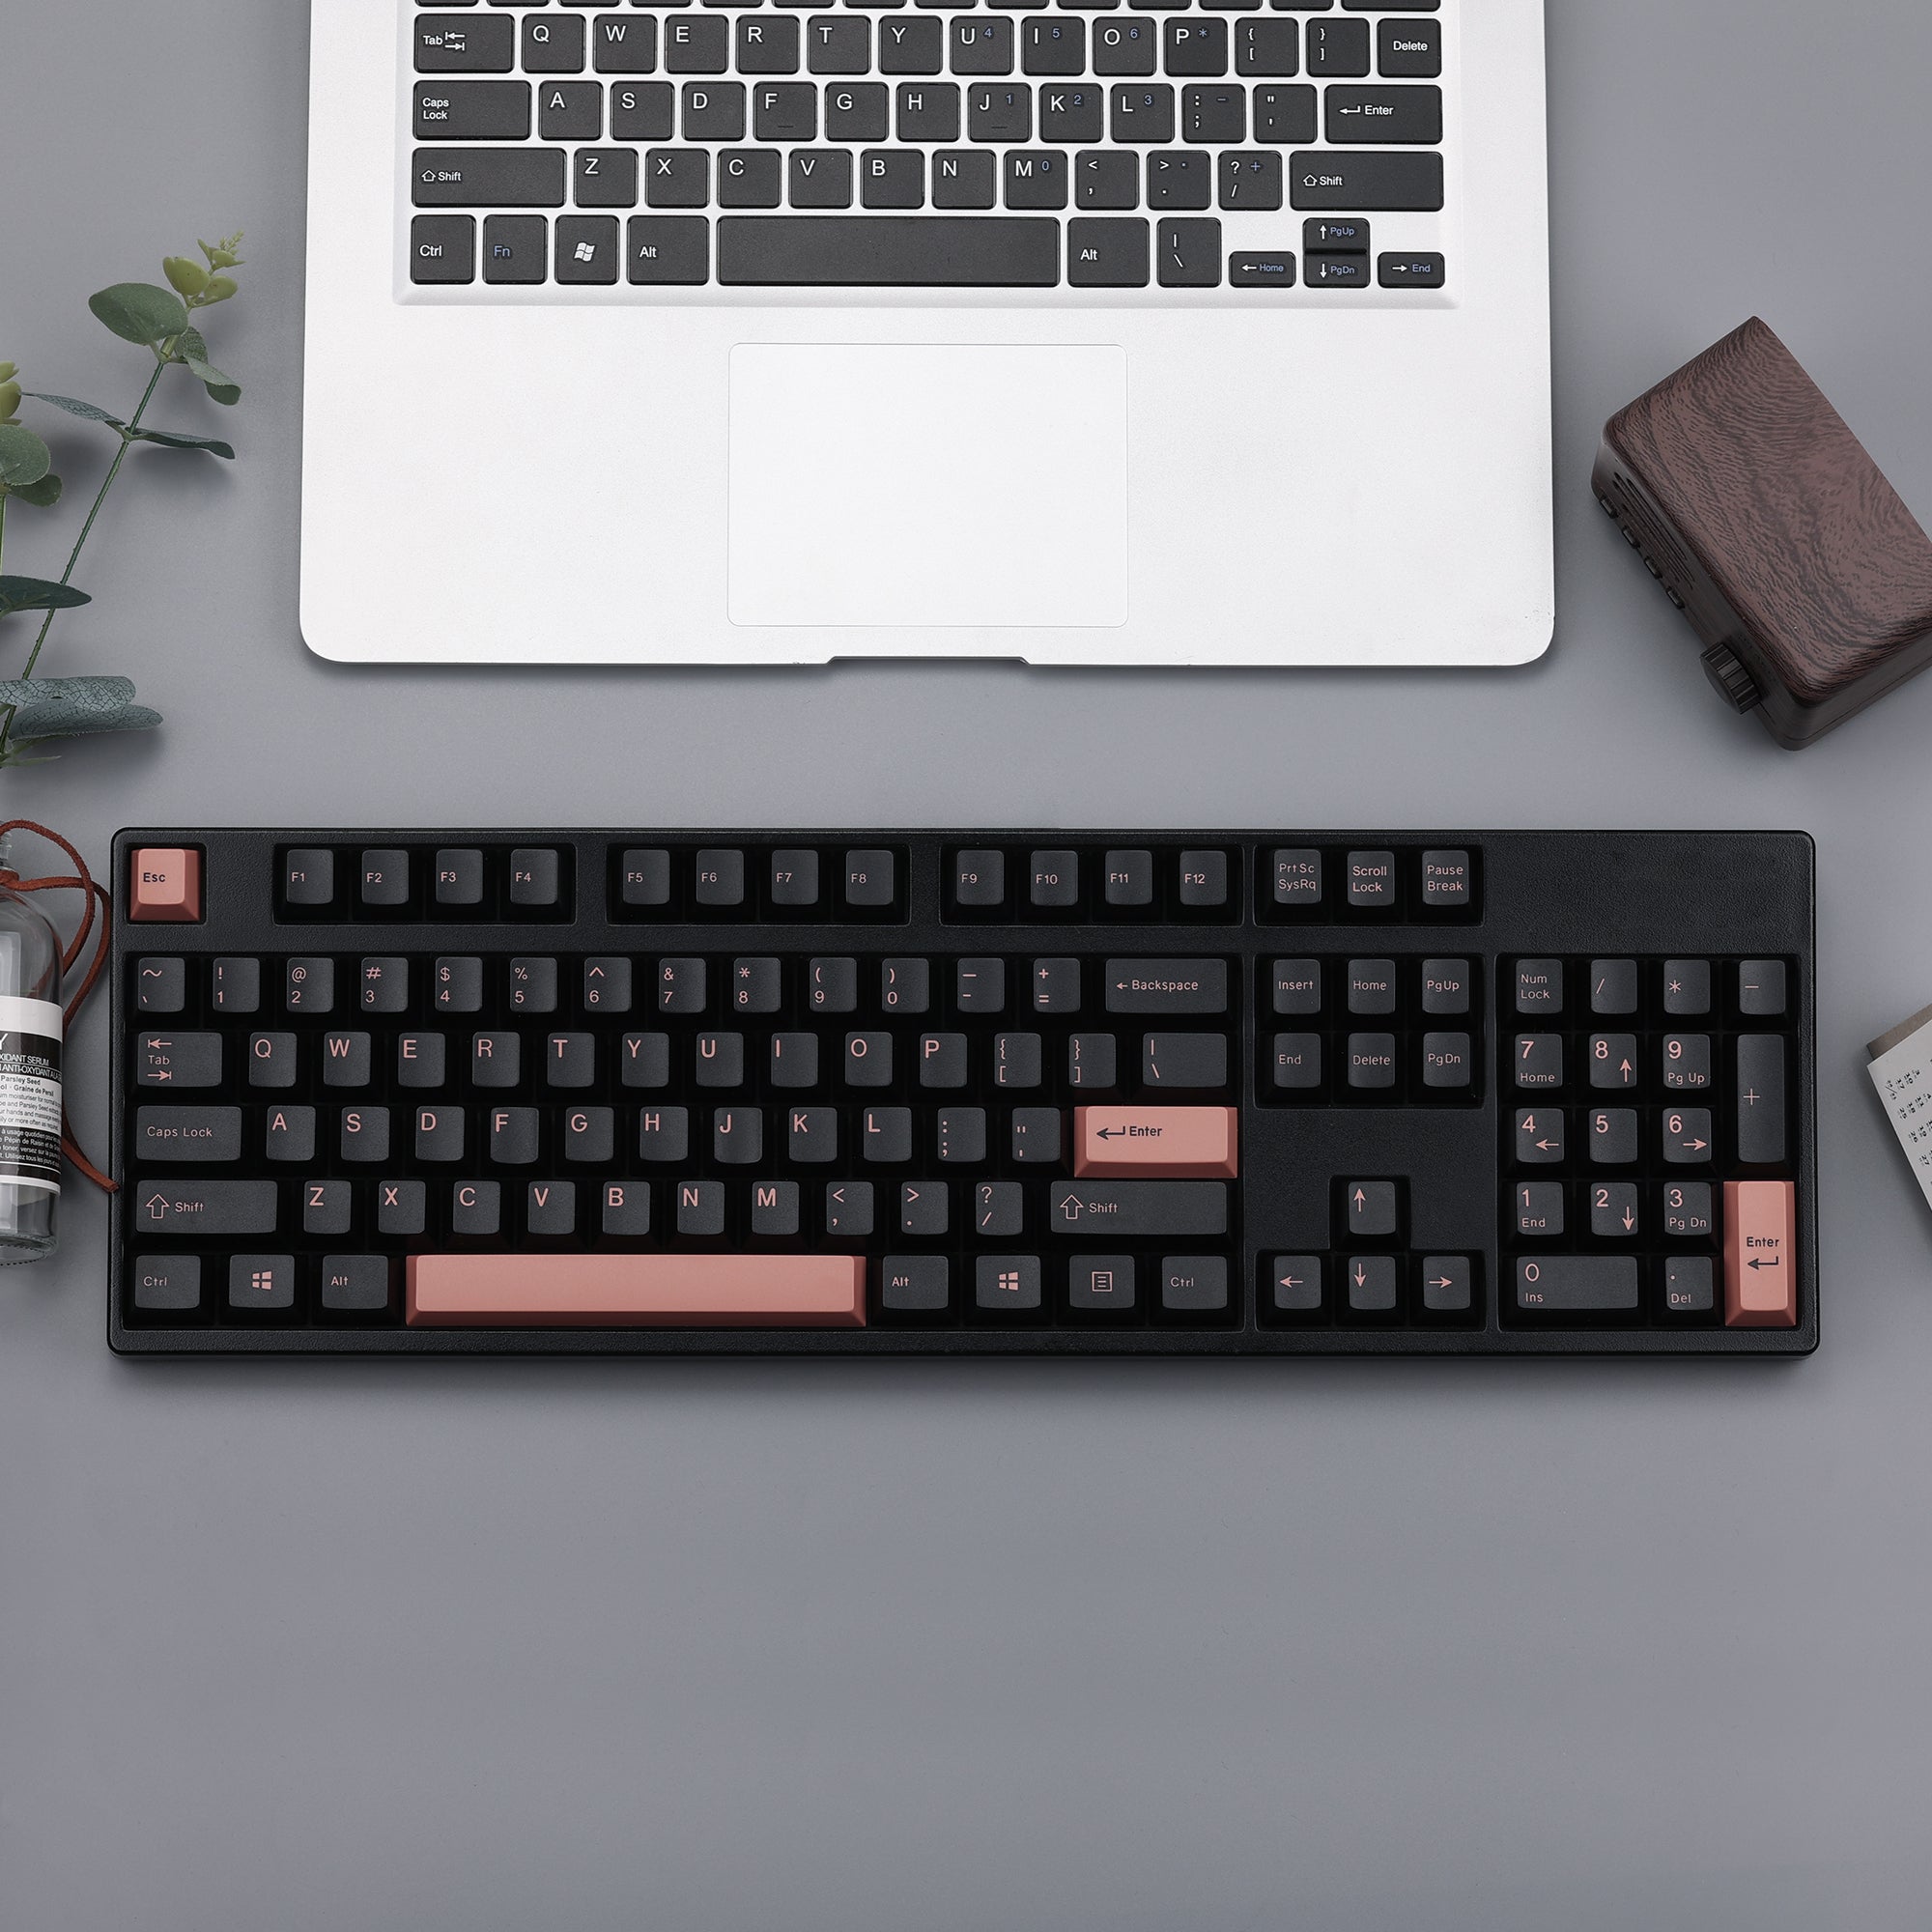 KBDfans Custom Keyboard EPBT Doubleshot ABS Pink Extended keycaps